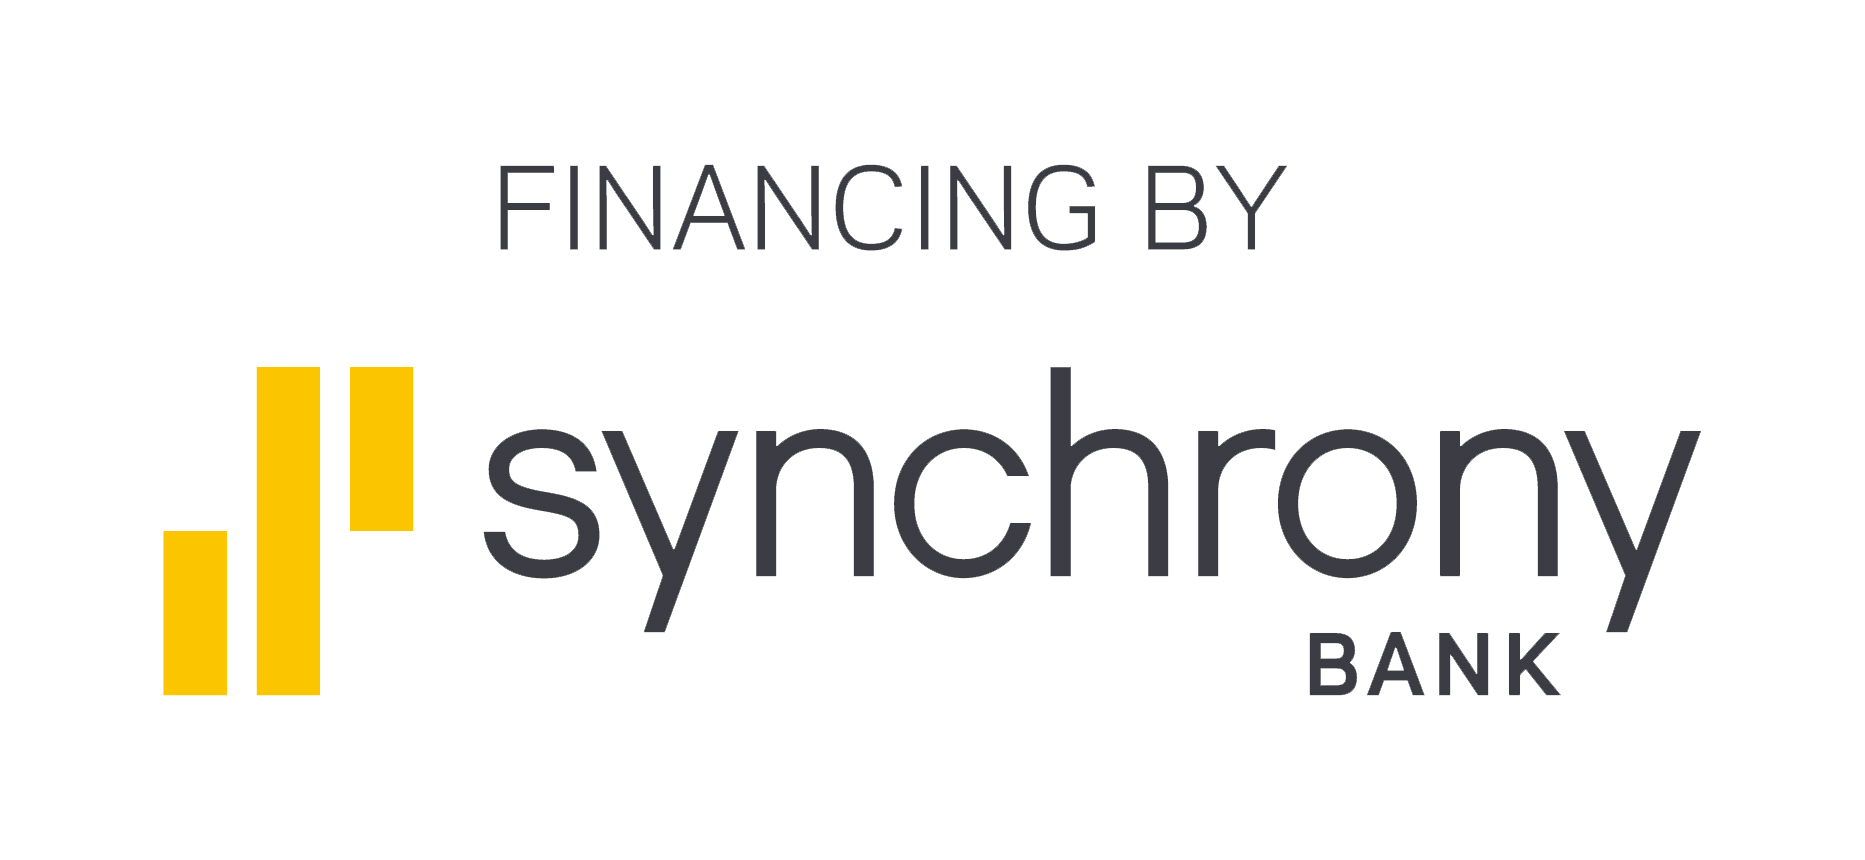 synchrony bank logo financing dashing dans plumbing | About Us